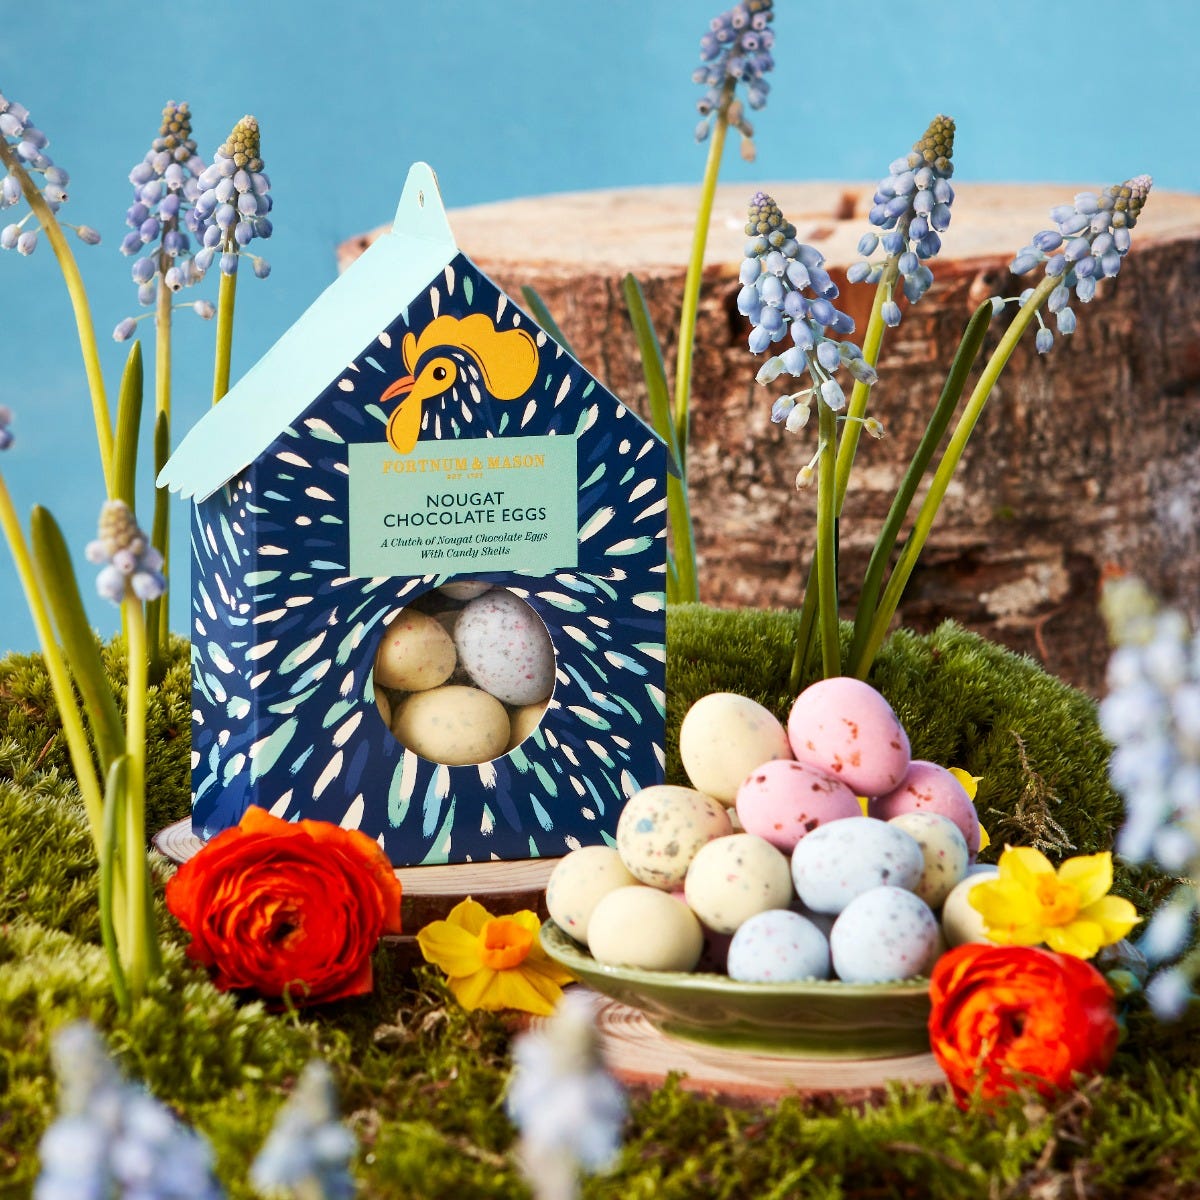 Nougat Chocolate Easter Eggs, 150g, Fortnum & Mason